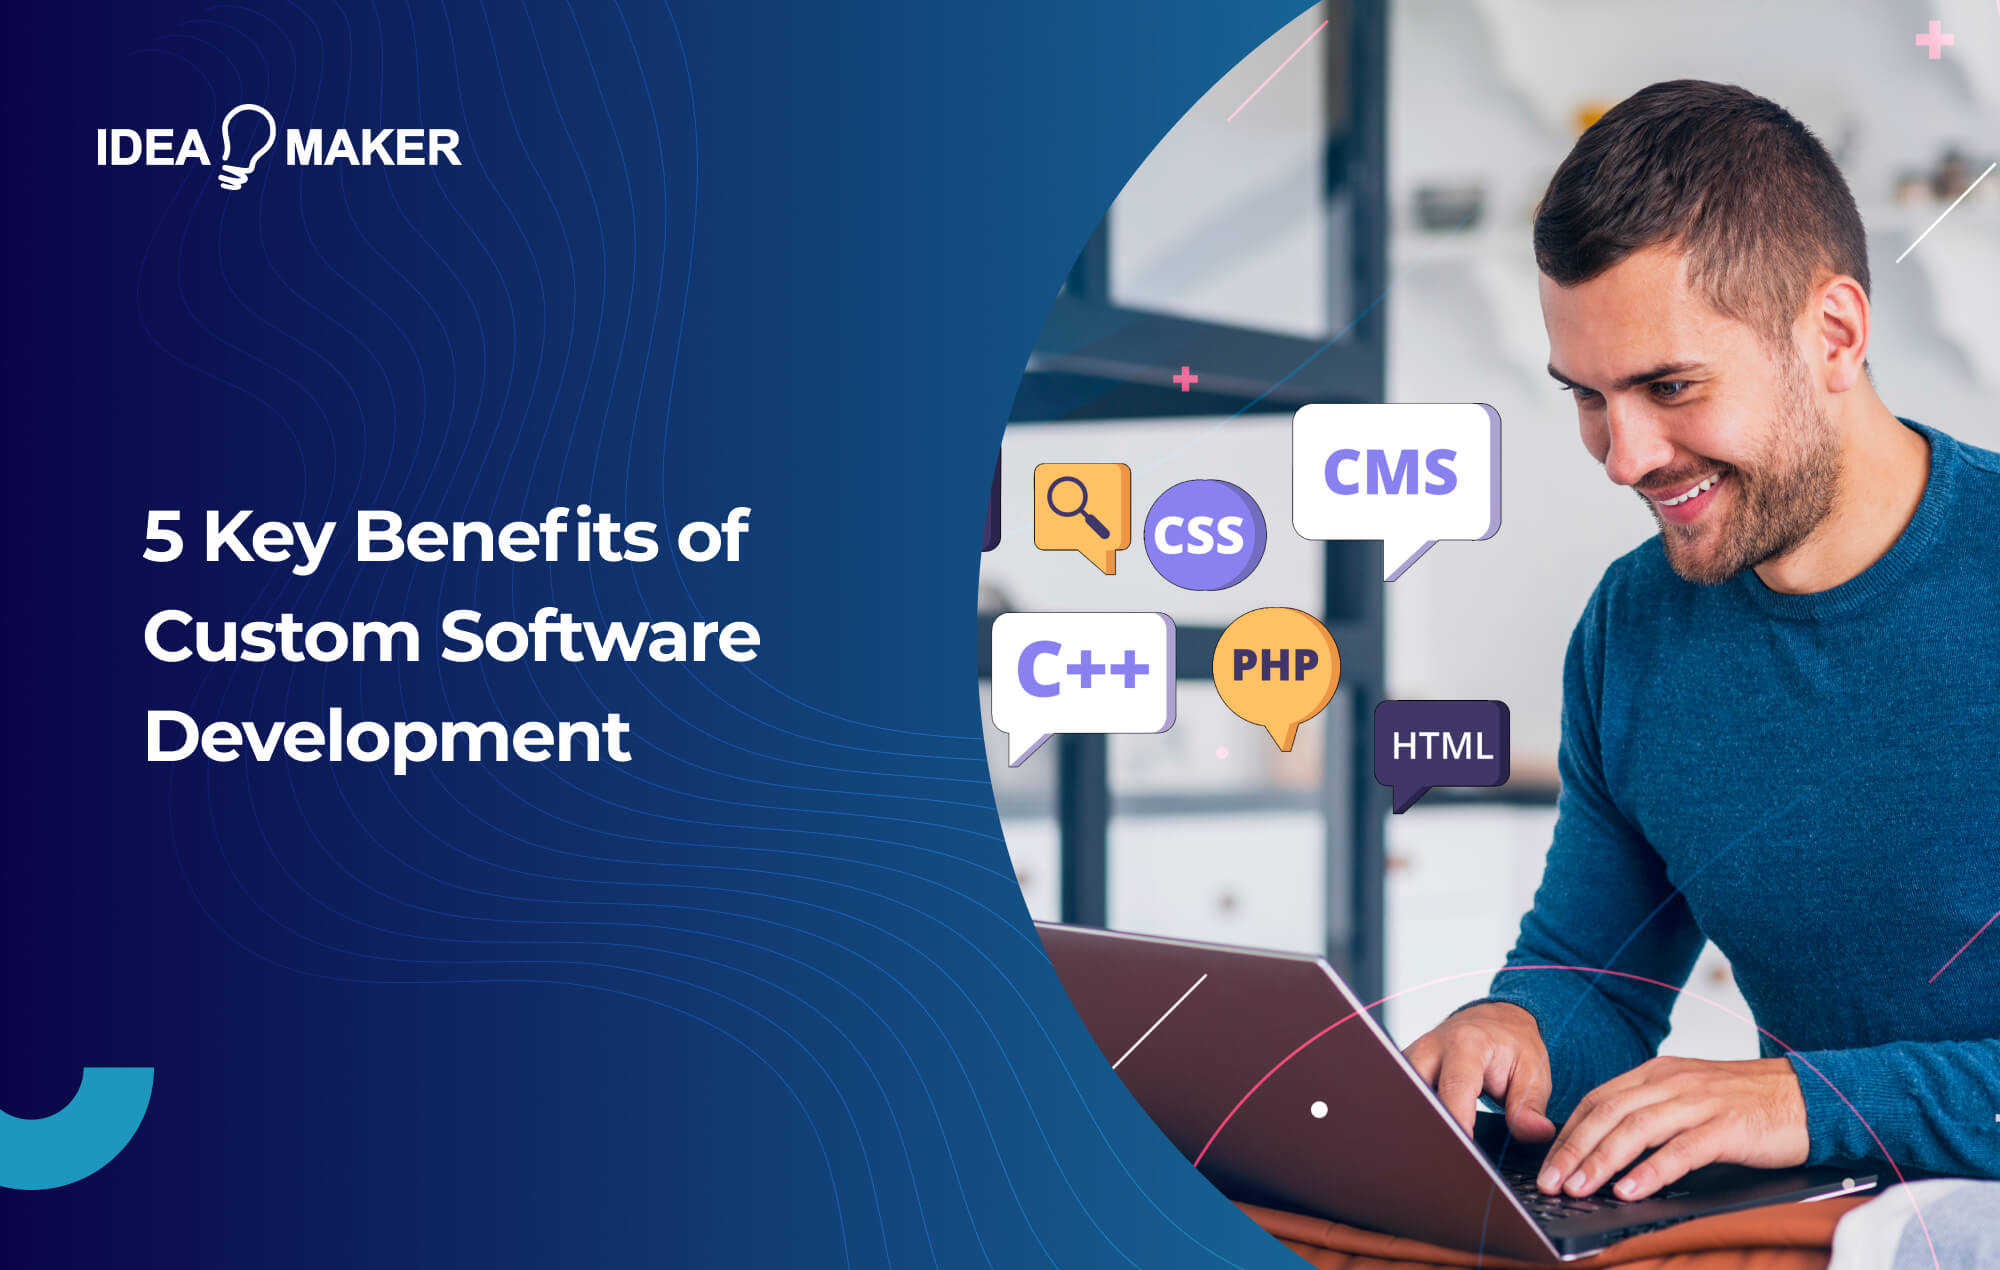 Ideamaker - 5 Key Benefits of Custom Software Development